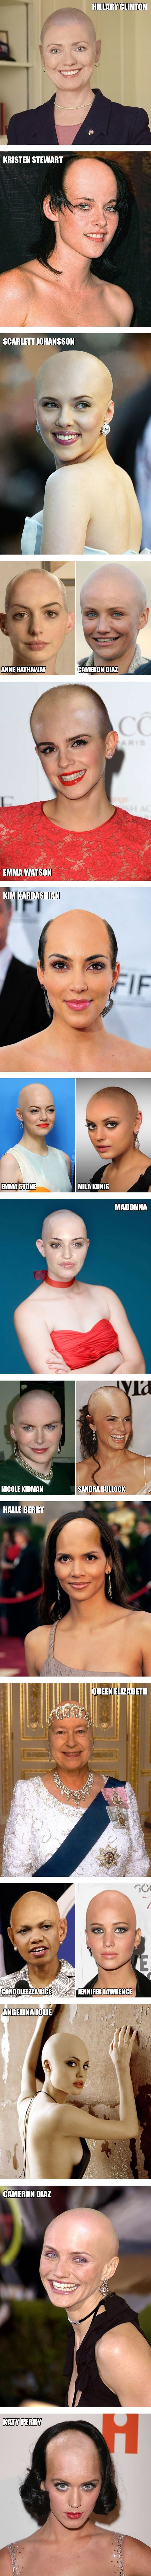 If female celebrities were bald